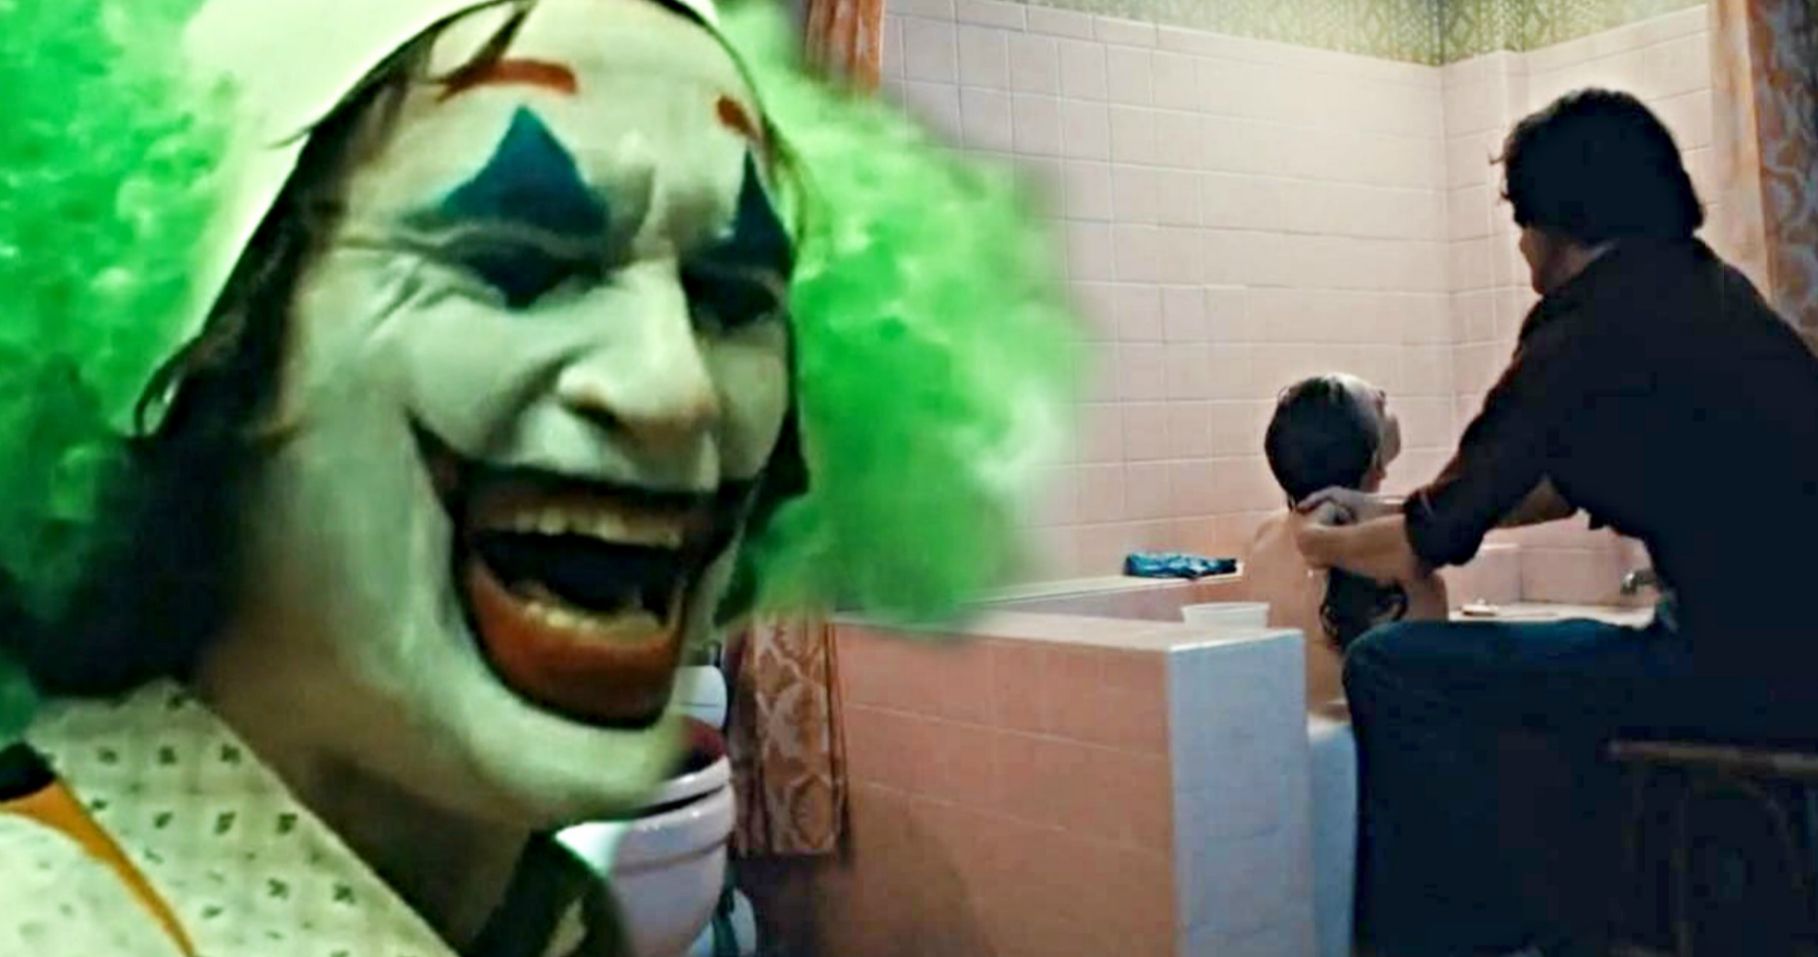 Joker Bathtub Scene Was Cut for Being 'Too Insane' Says Director